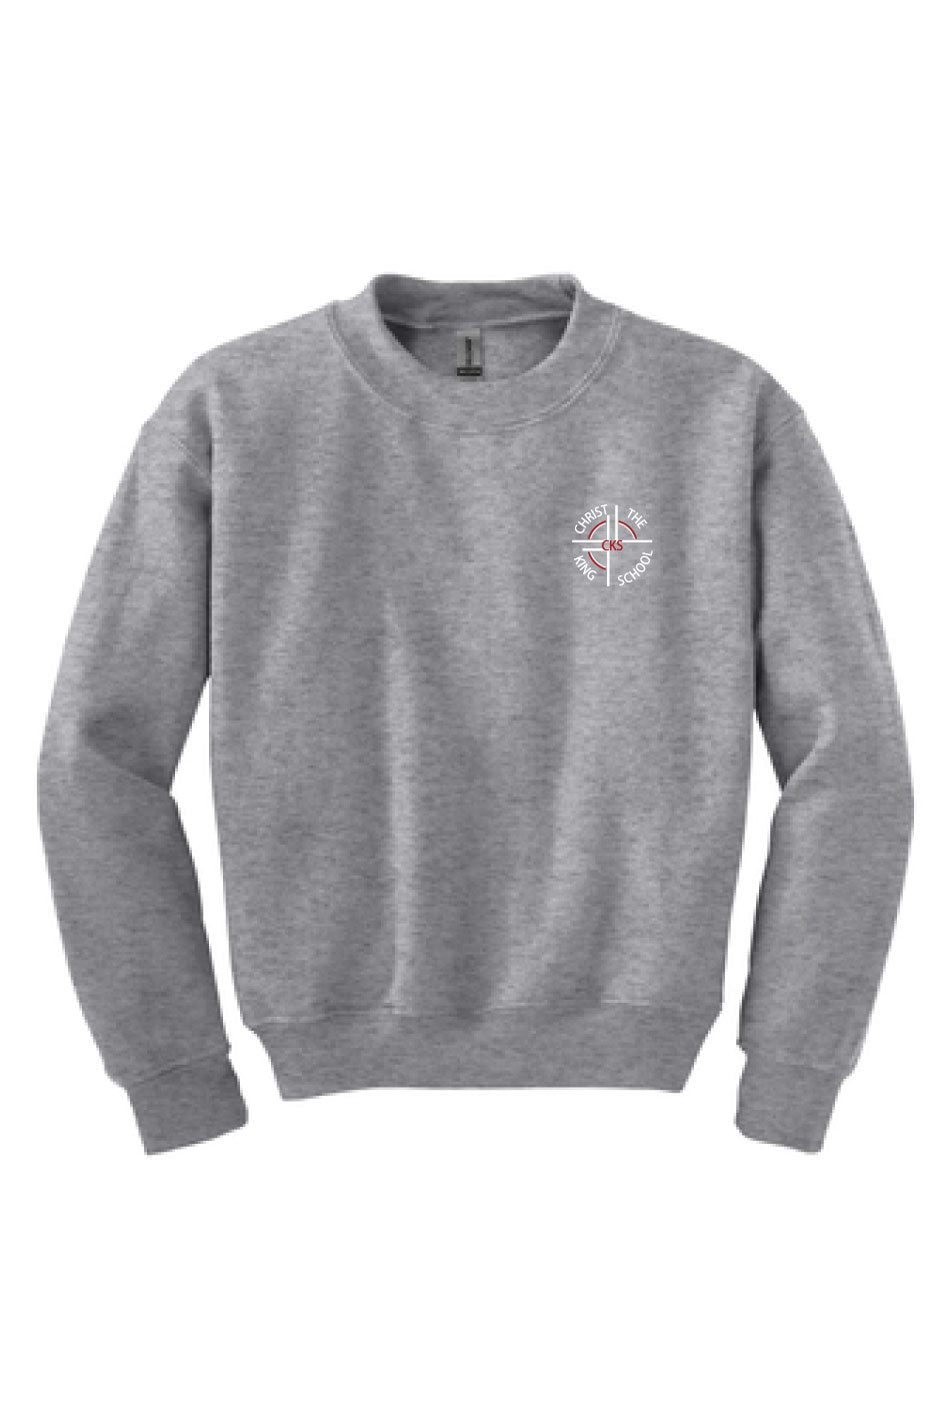 YOUTH CKS Crewneck Sweatshirt - Grey*